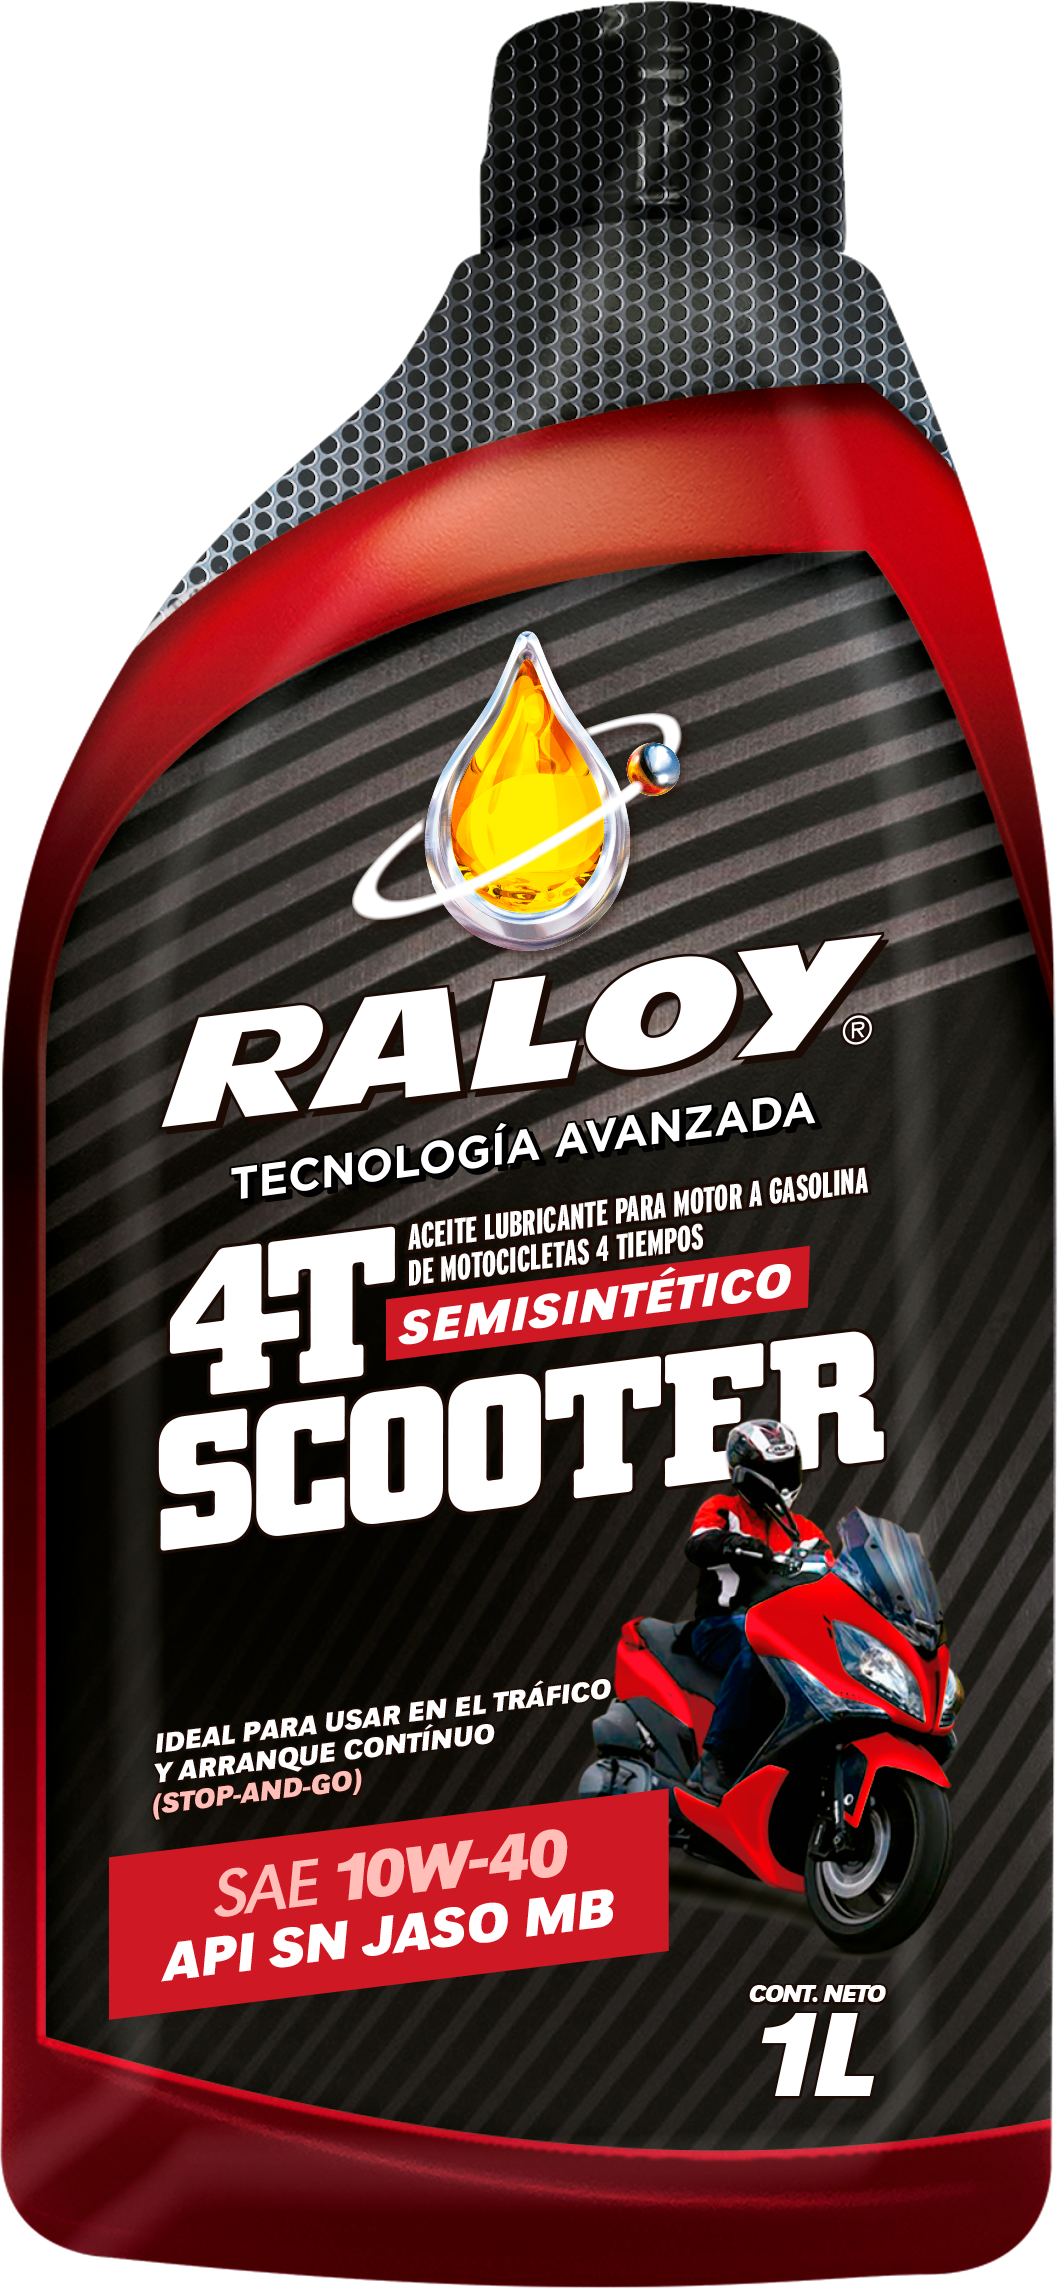 Raloy 4T Scooter Semisintético Jaso Mb Api Sn Sae 10W-40